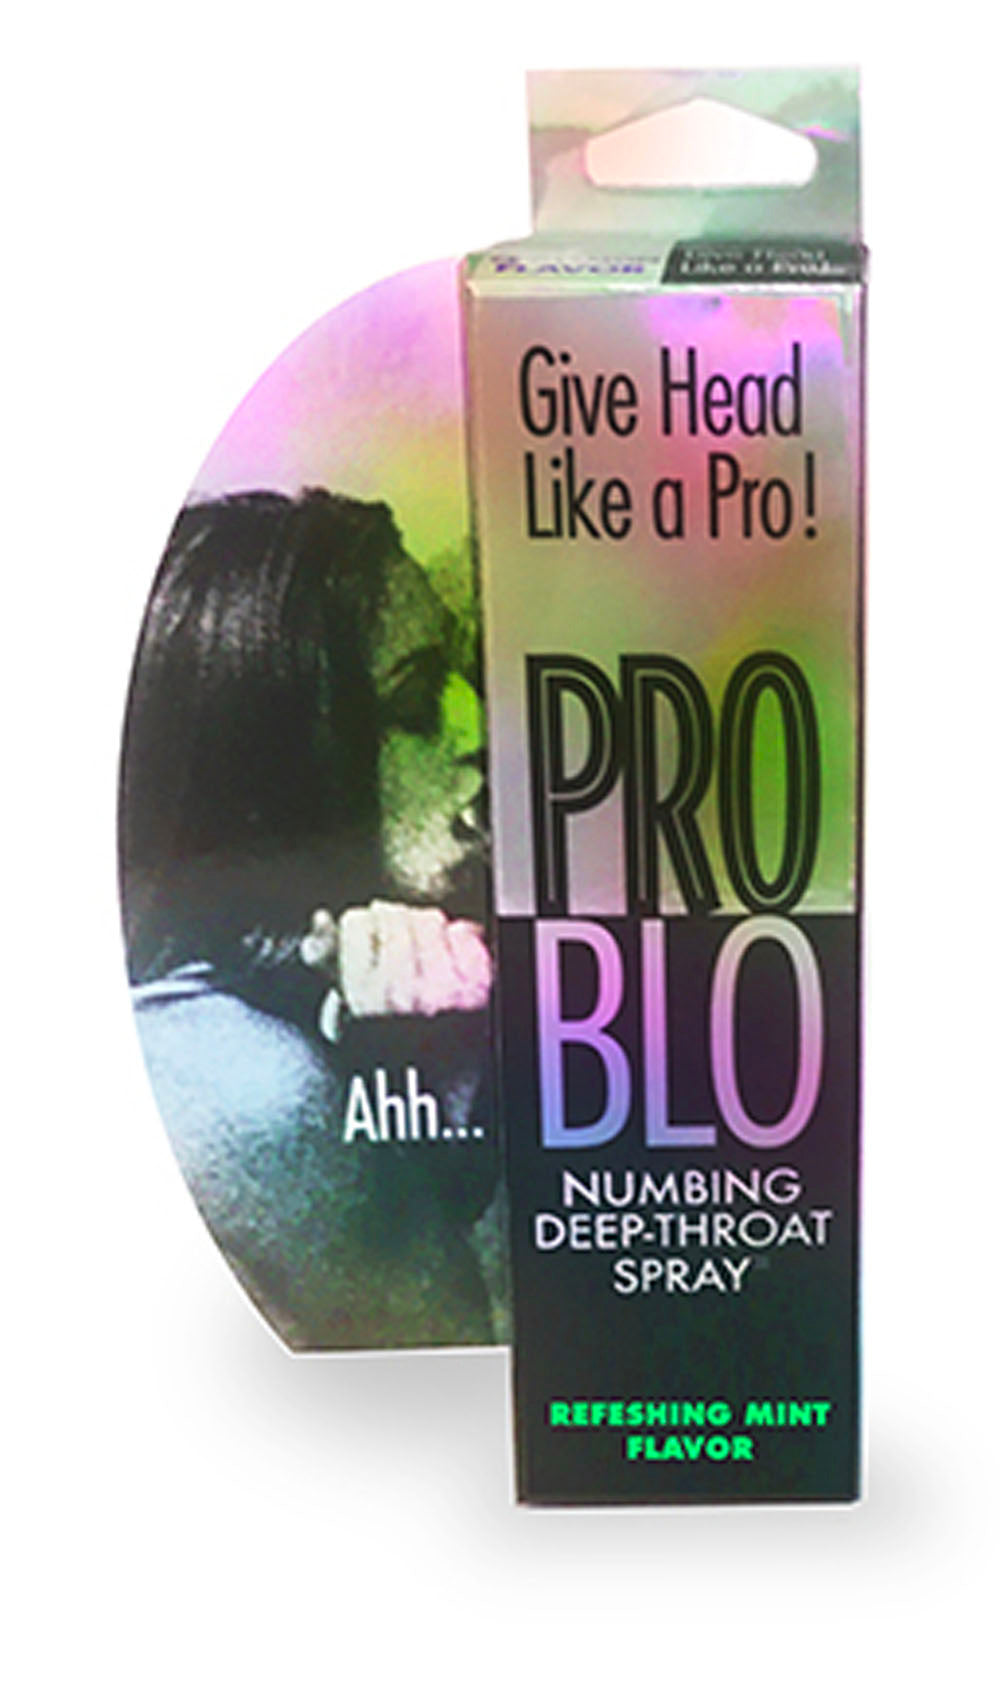 Problo Numbing Deep Throat Spray - Refreshing Mint - 1 Fl. Oz.